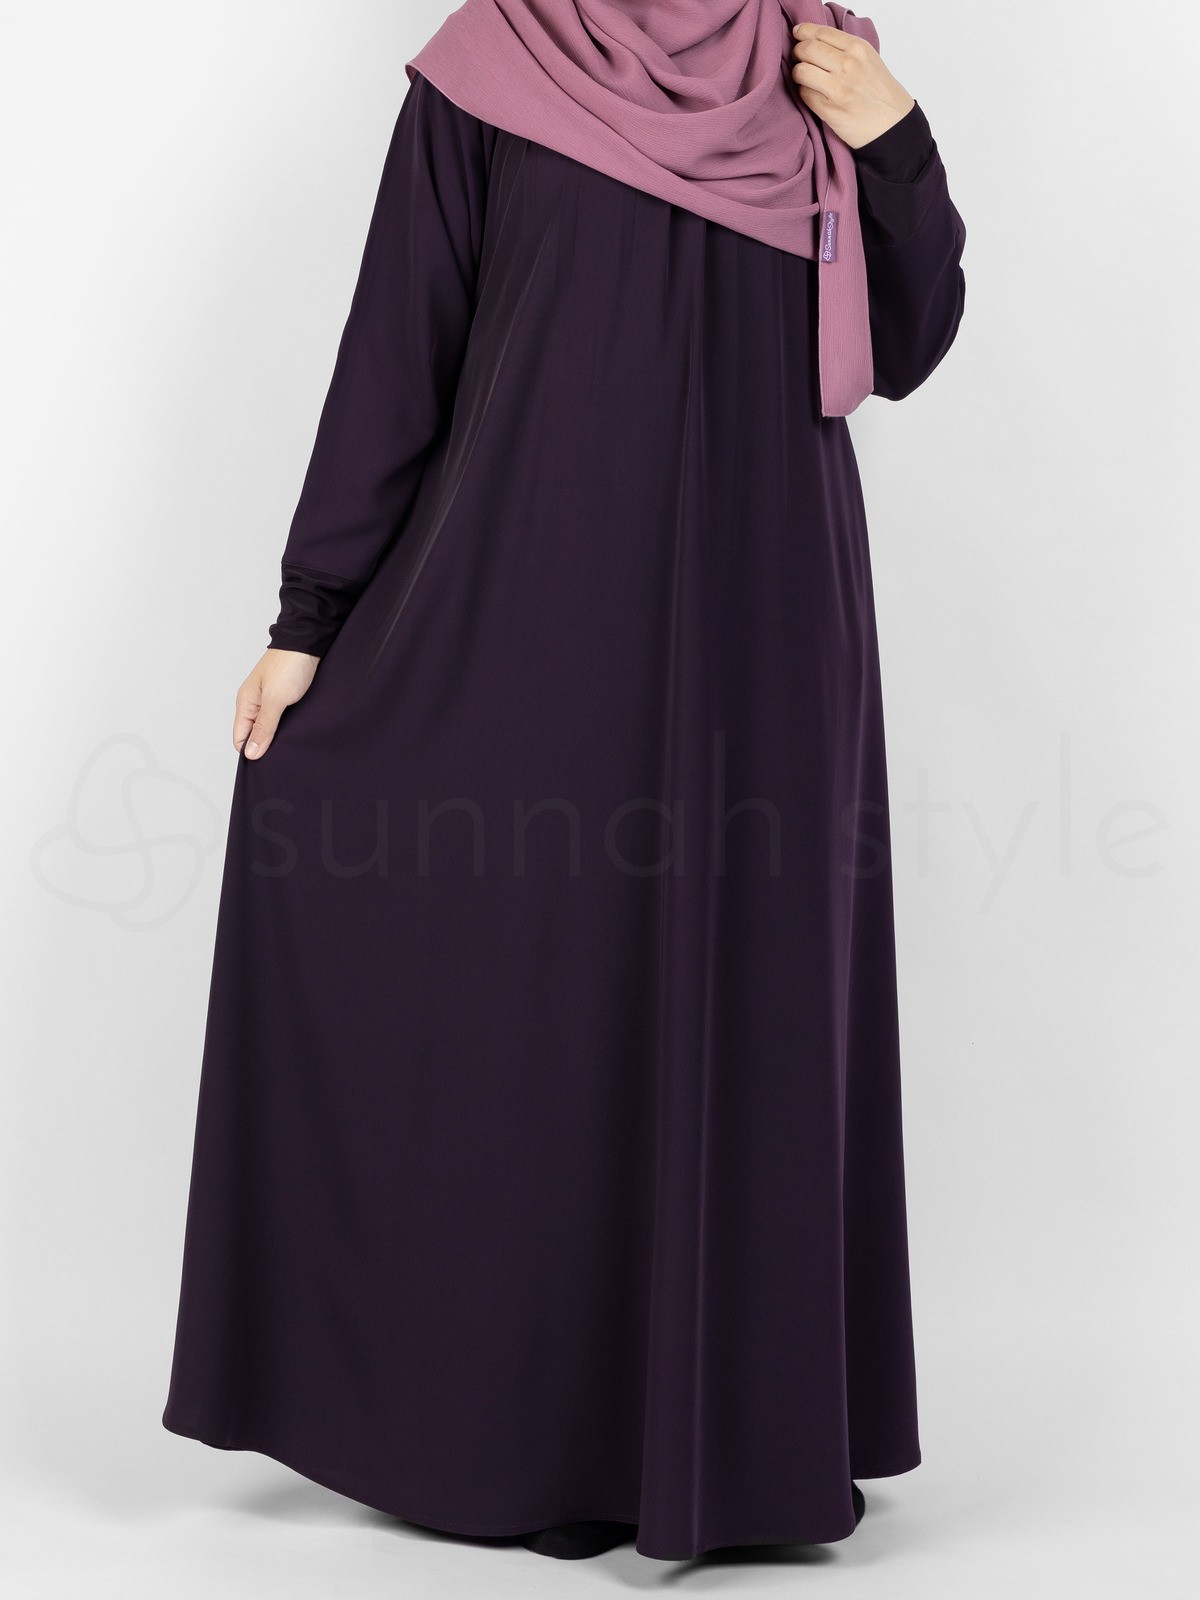 Sunnah Style - Simplicity Umbrella Abaya (Dark Violet)